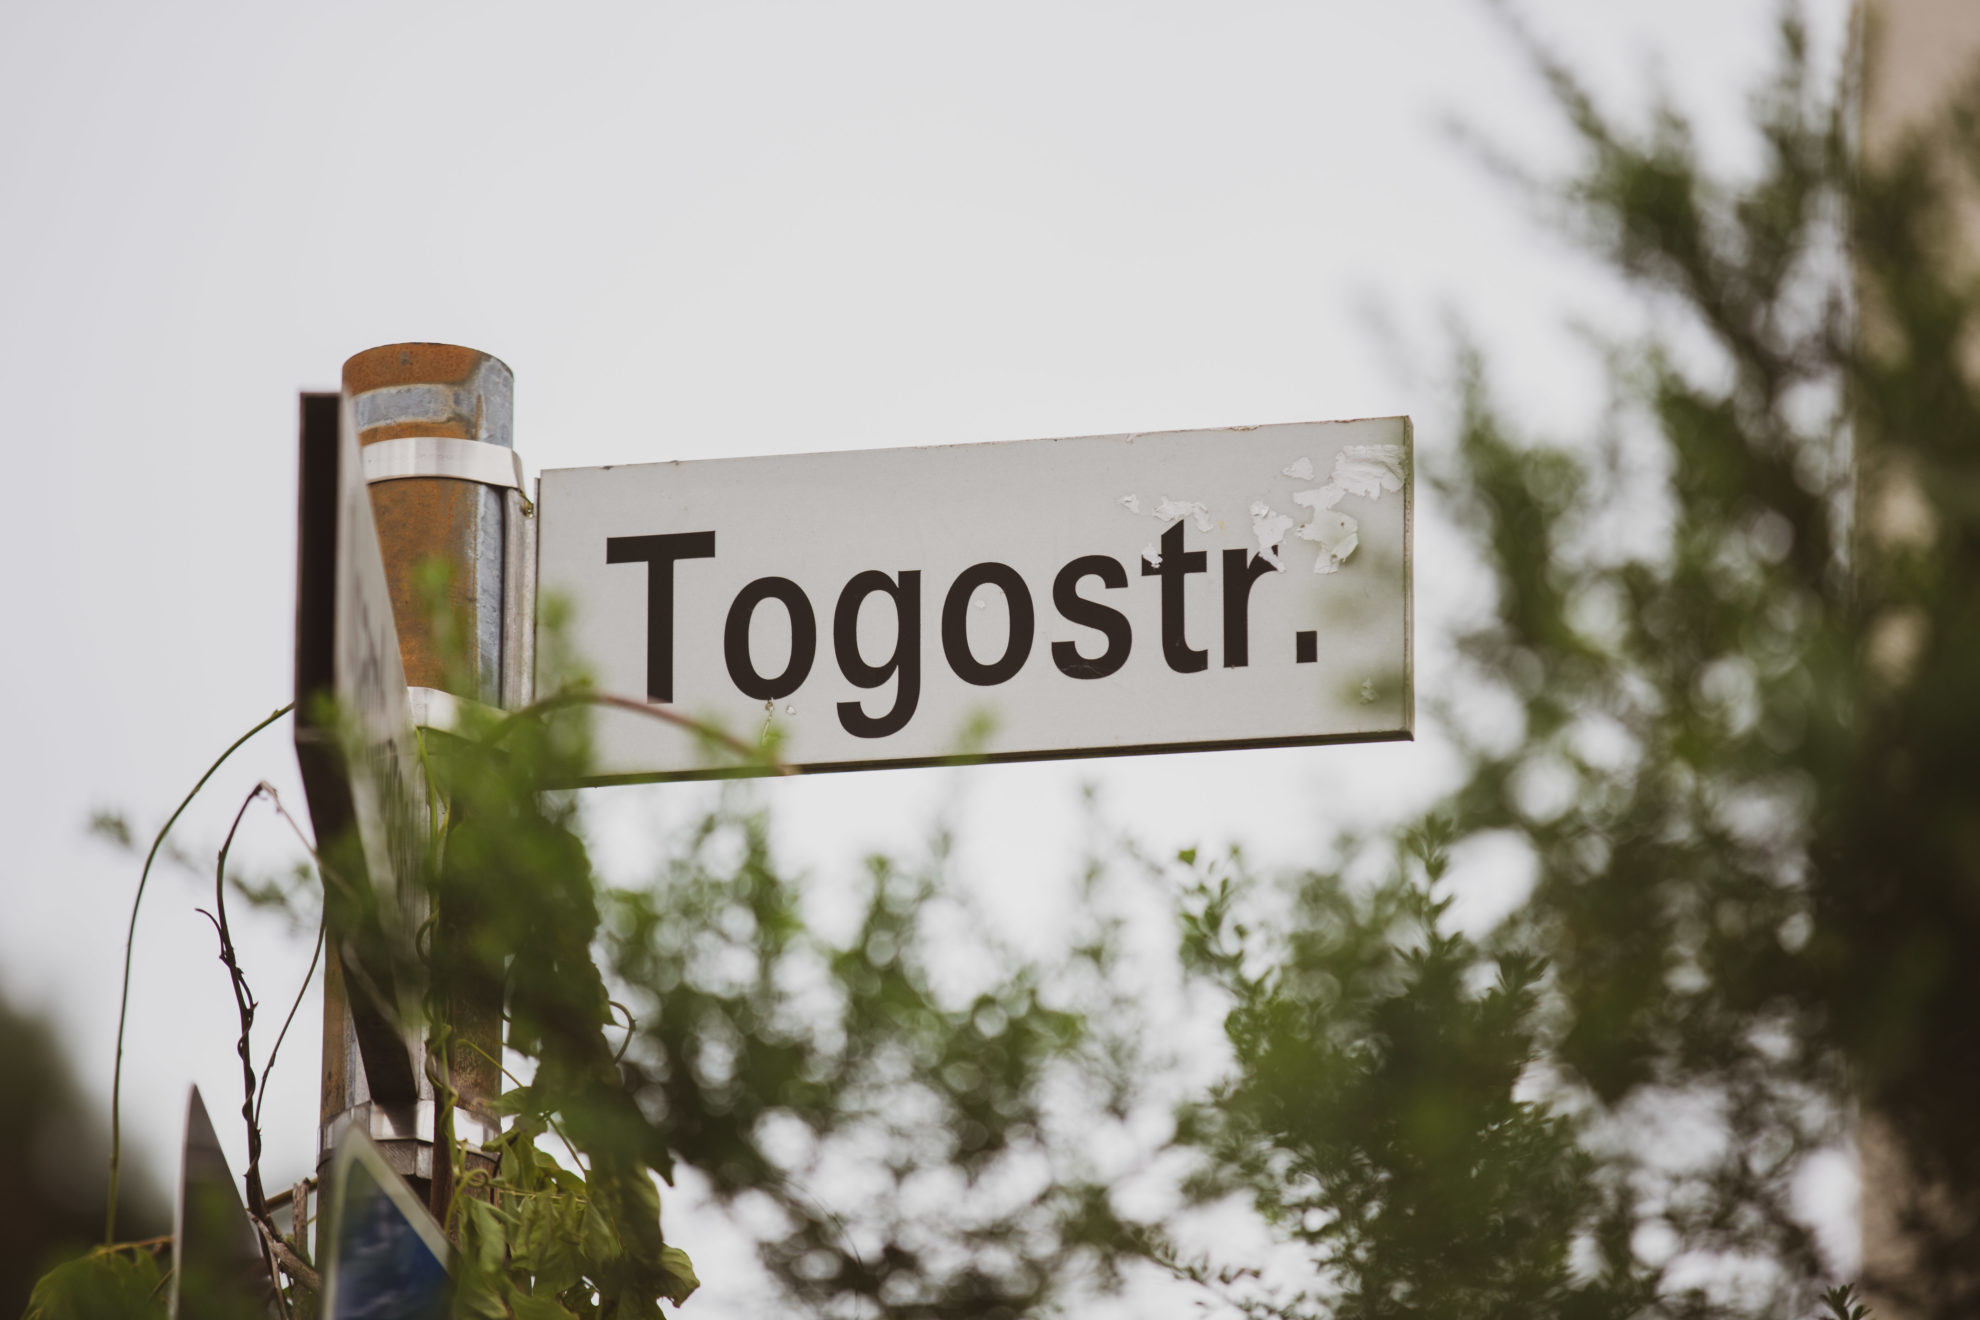 Togostrasse